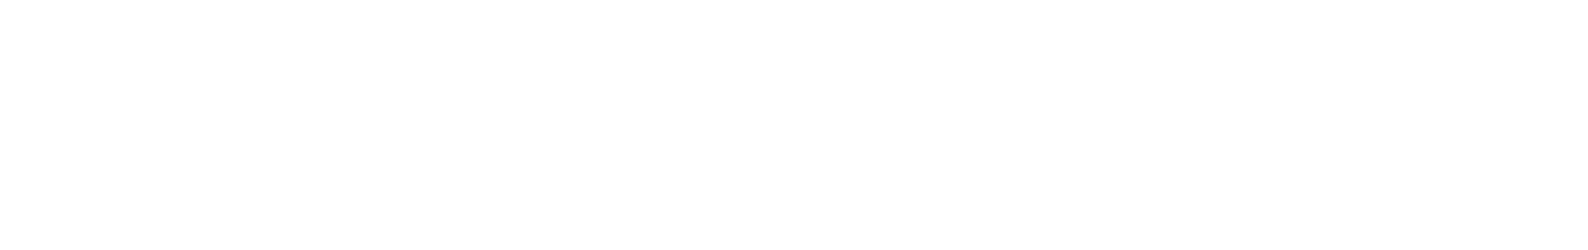 Periwinkle Kitchen & Coffee Cafe logo scroll